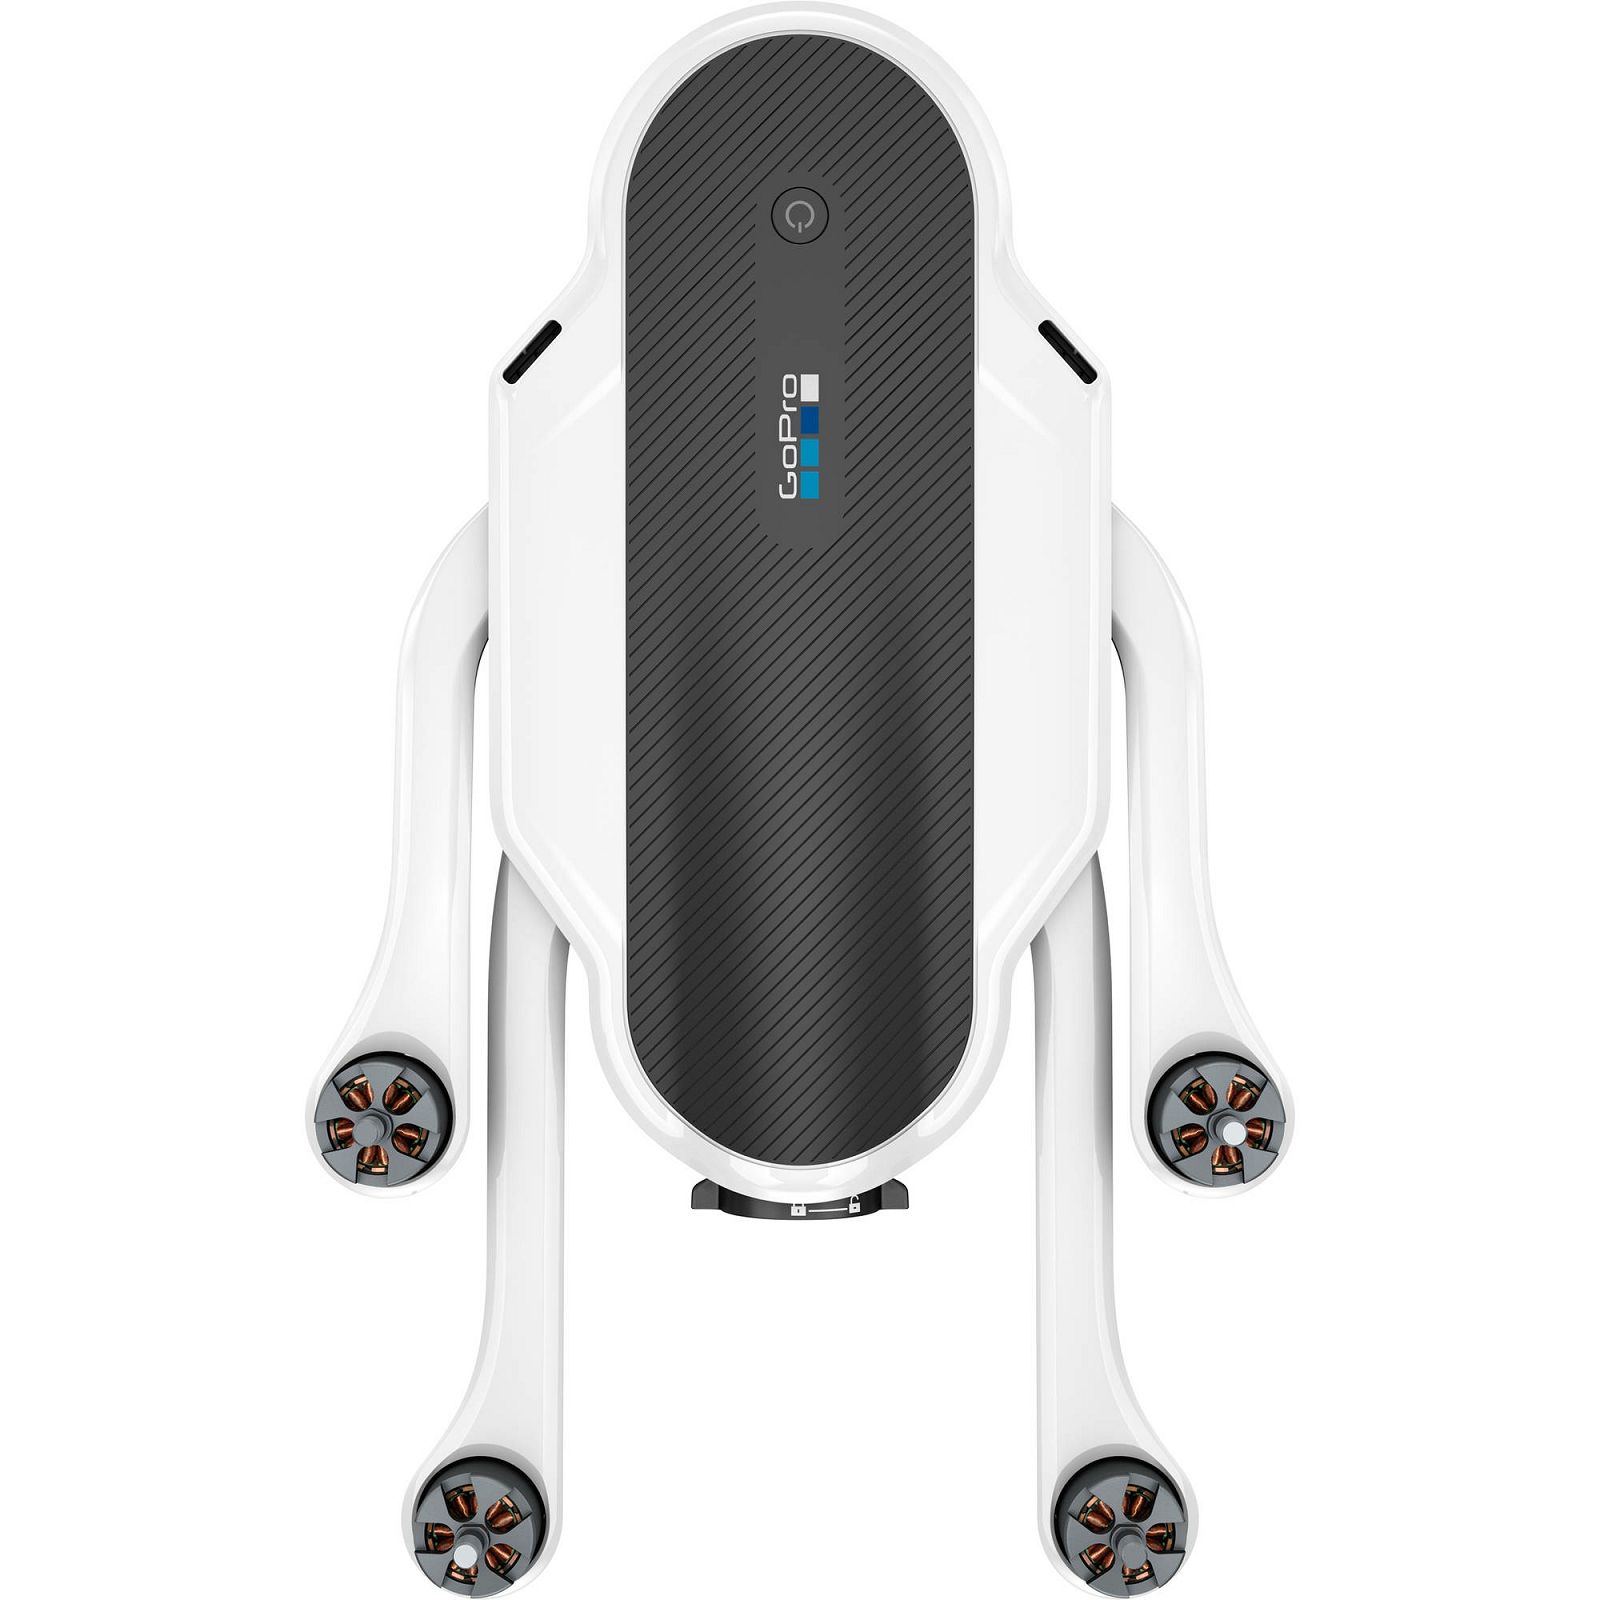 GoPro Karma Light (HERO5 Black Harness Included) dron s Karma Grip 3-osnom stabilizacijom za snimanje iz zraka (QKWXX-015-EU)